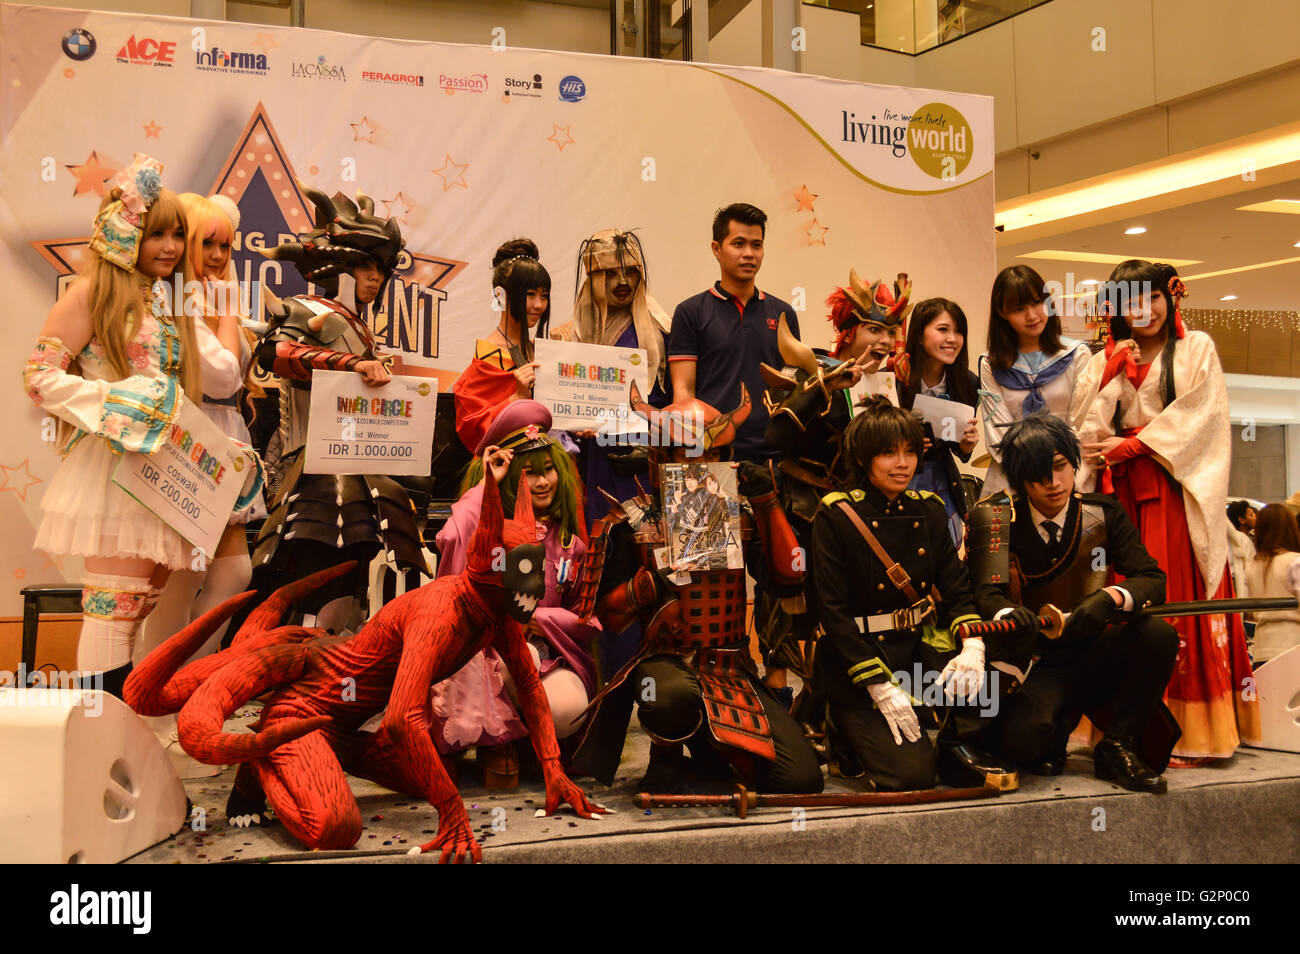 Cosplay Wettbewerb in lebenden Welt Mall, Tangerang, Indonesien Stockfoto